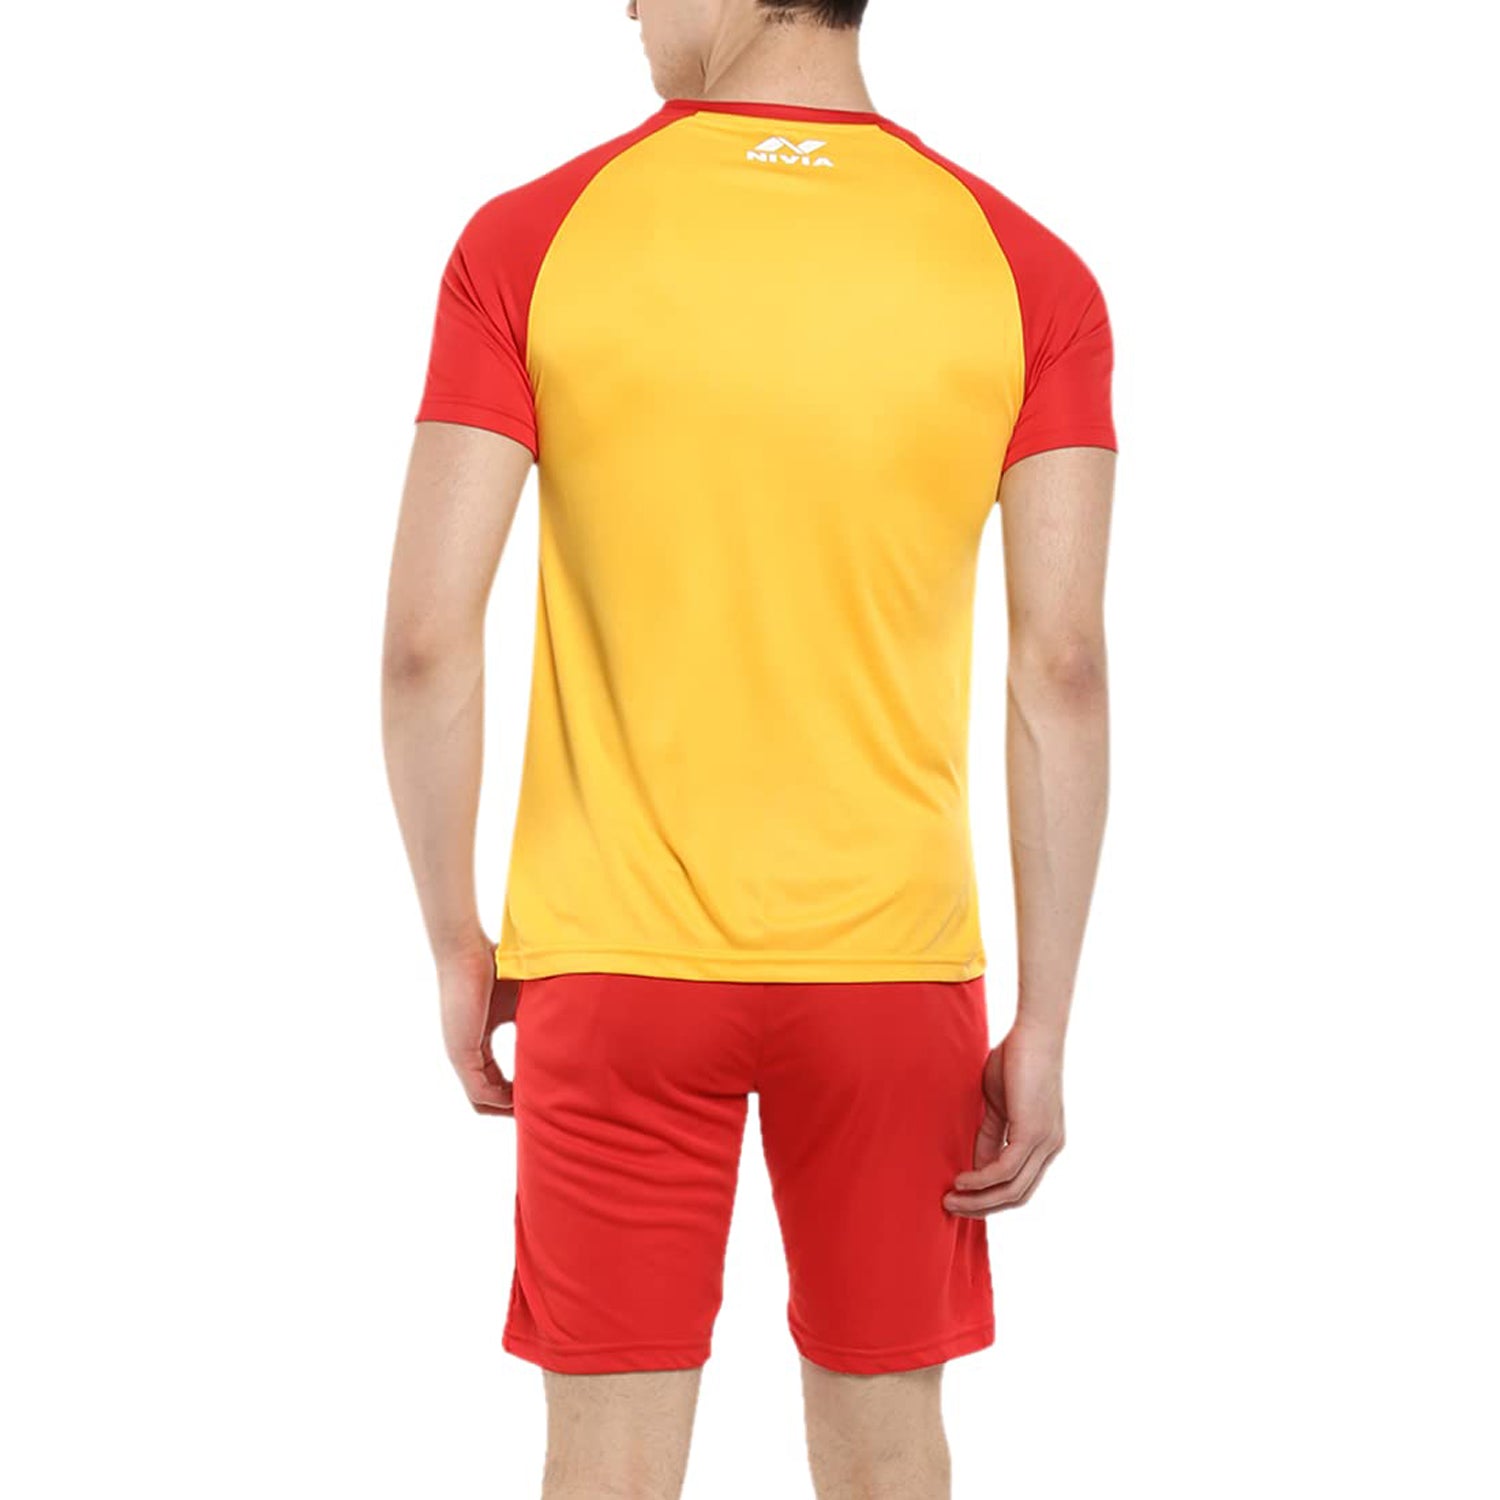 Nivia 7175 Destroyer Football Jersey Set for Men, G.Yellow/Red - Best Price online Prokicksports.com